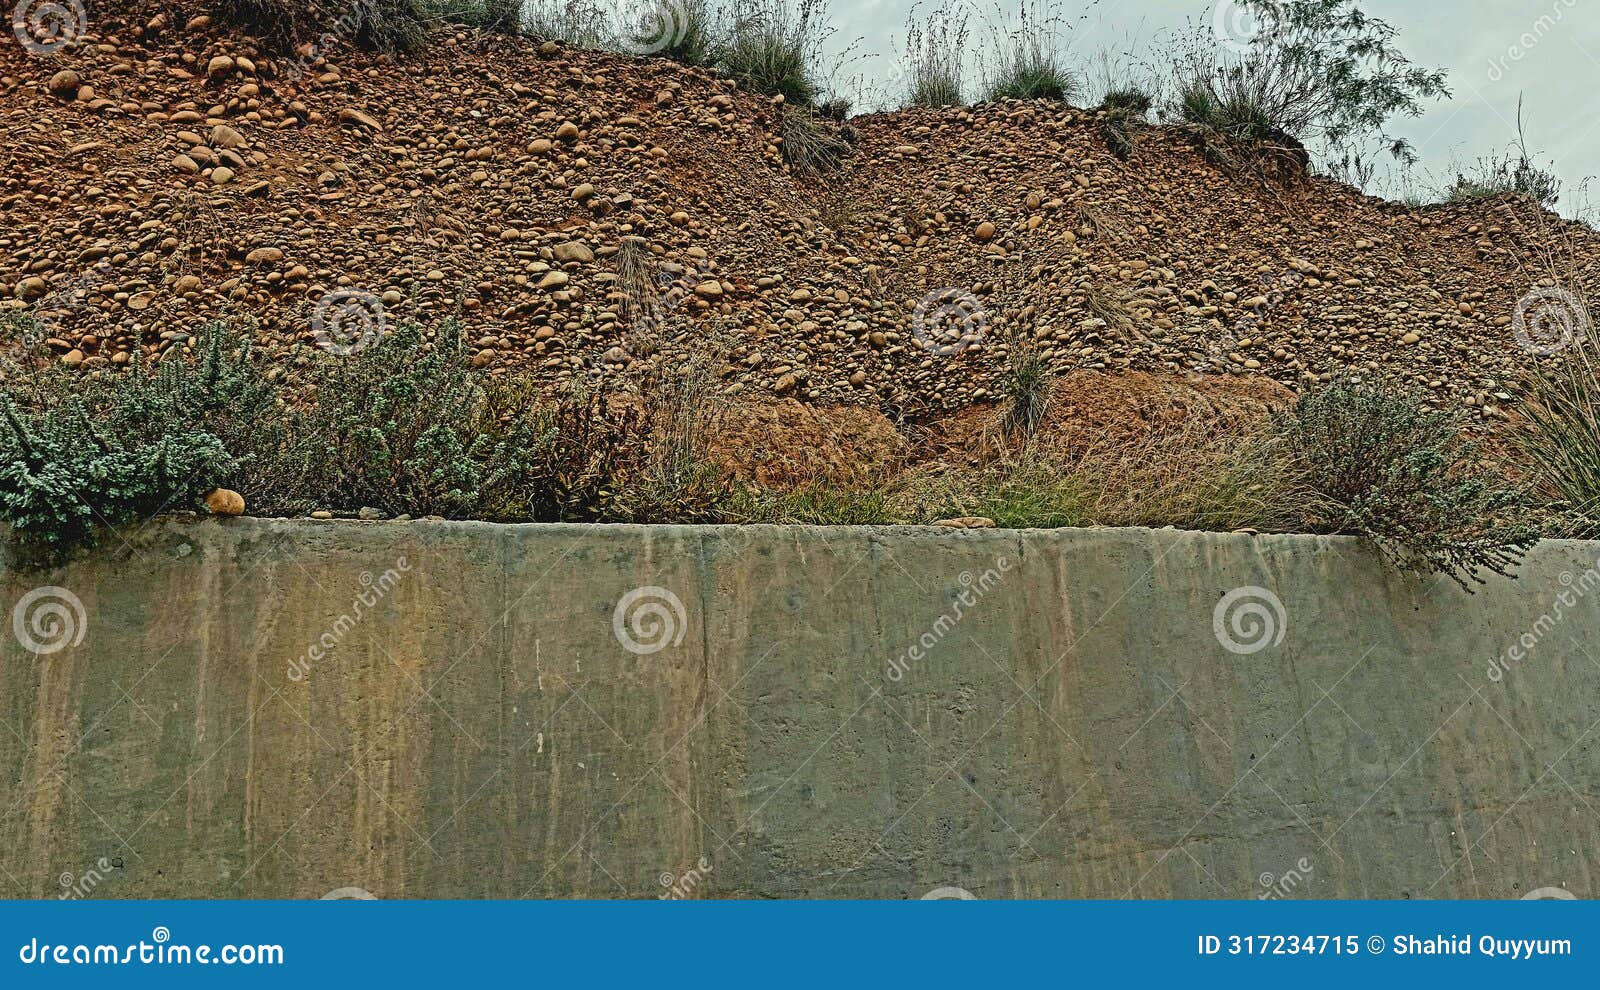 small stones wall alongside road